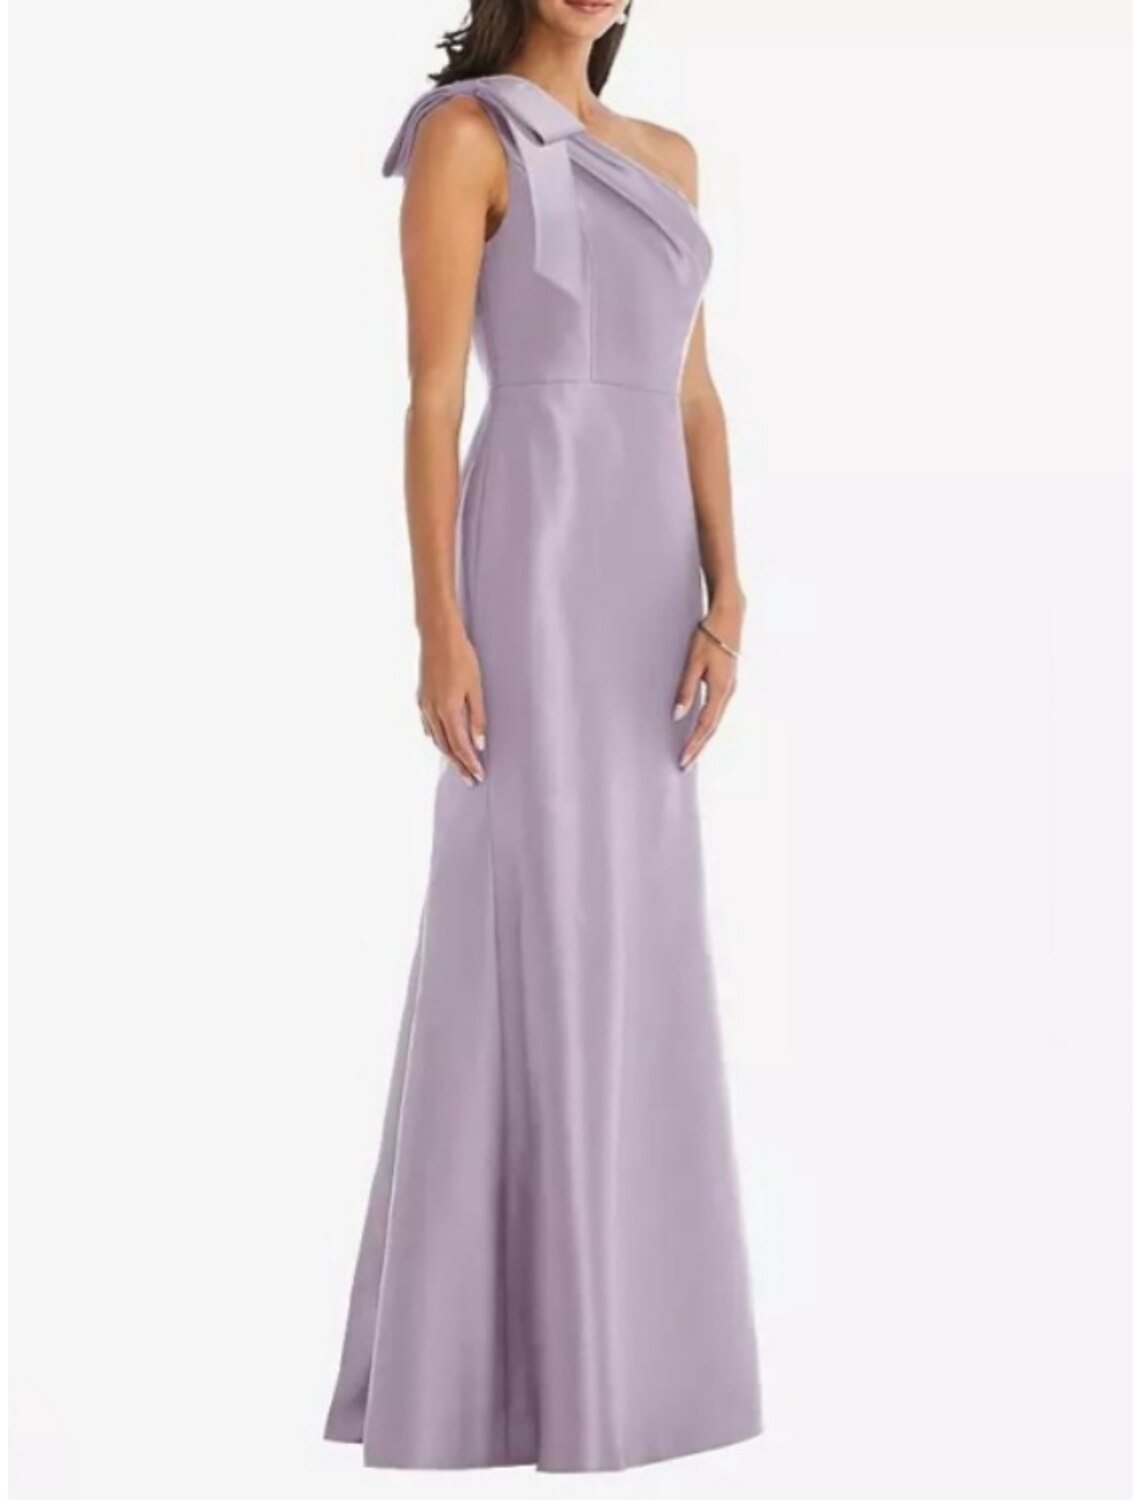 Sheath / Column Bridesmaid Dress One Shoulder Sleeveless Elegant Floor Length Satin with Bow(s) / Ruching